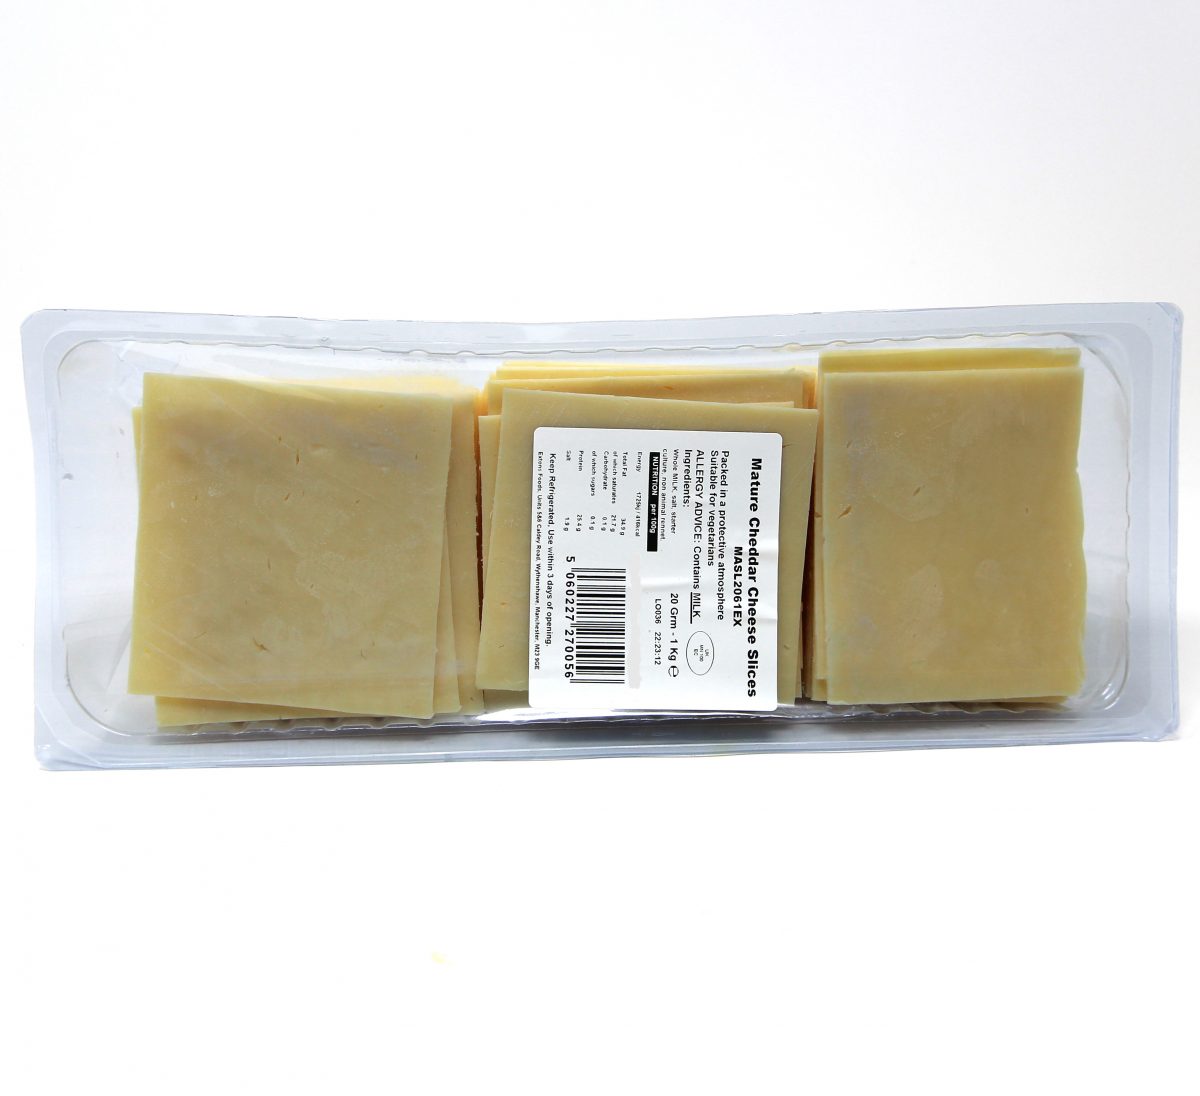 Mature-Cheddar-Cheese-1kg